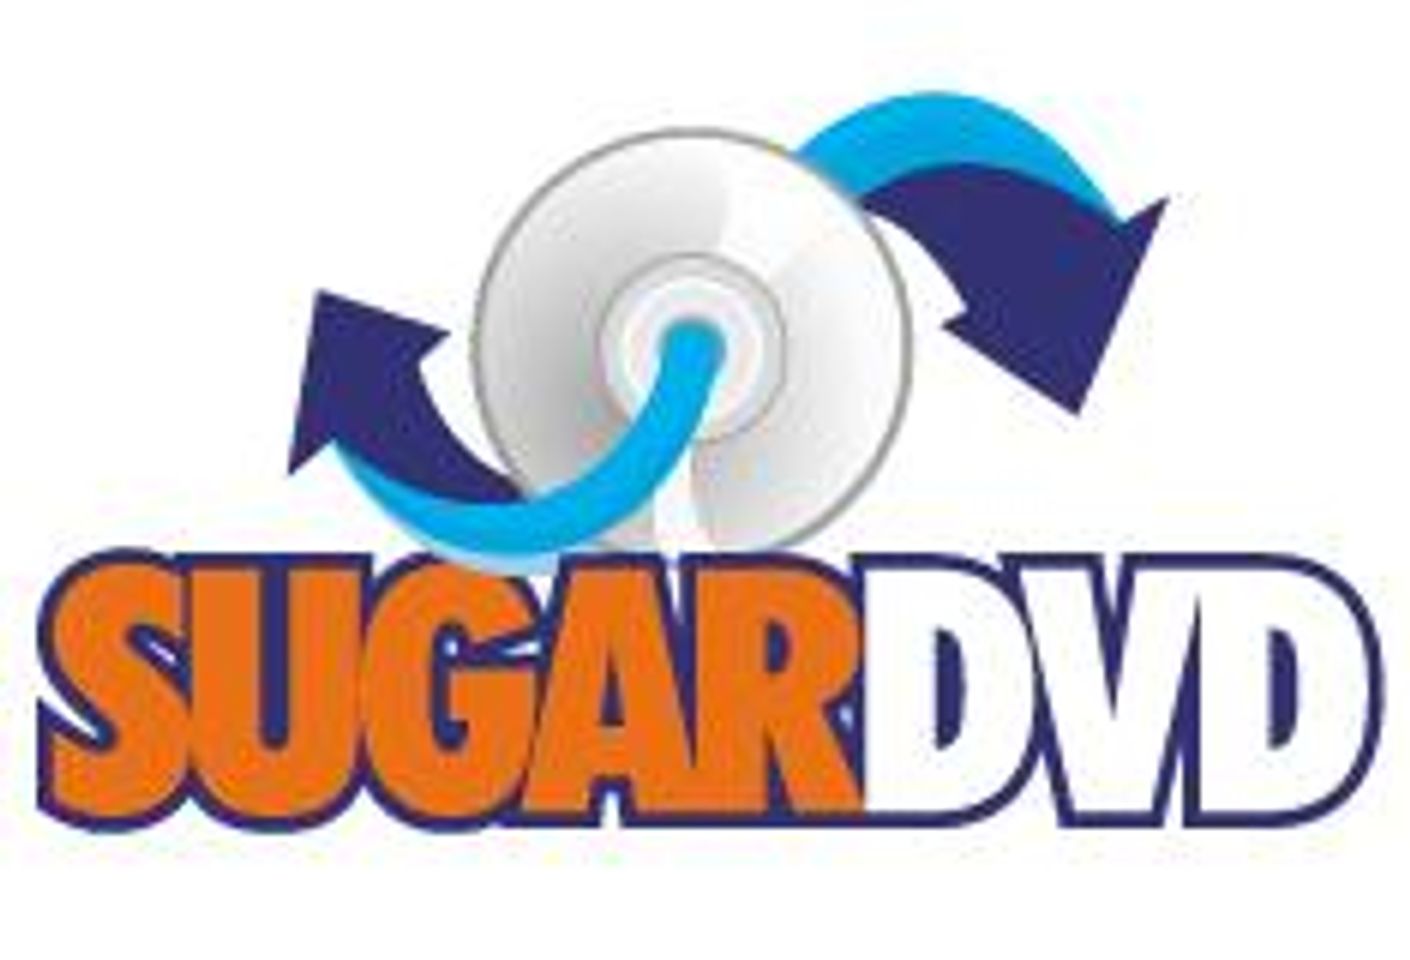 SugarDVD Bids $500,000 for Lauren Conrad Sex Tape